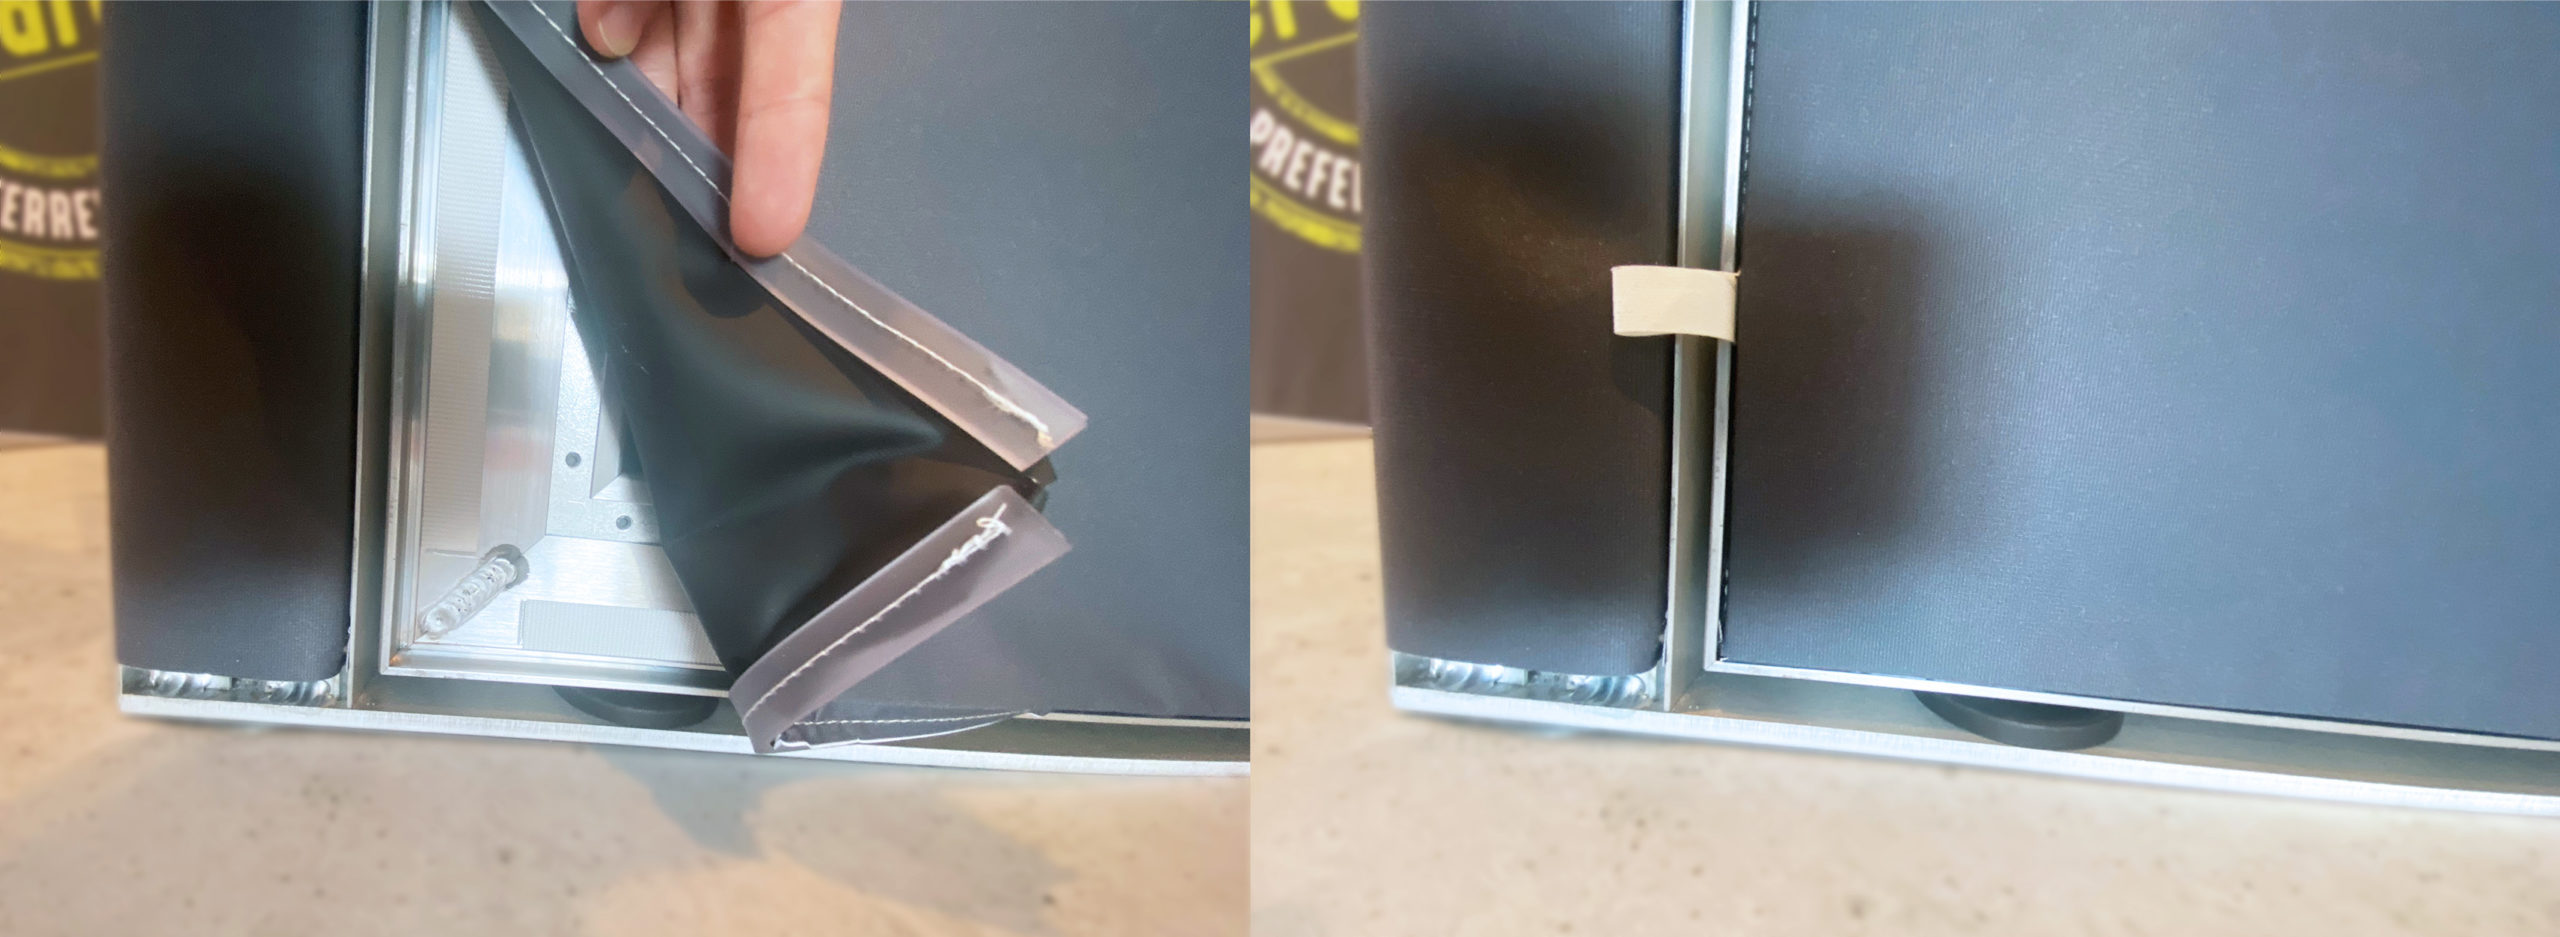 FrameTex Black banner installed in a aluminum tension frame system